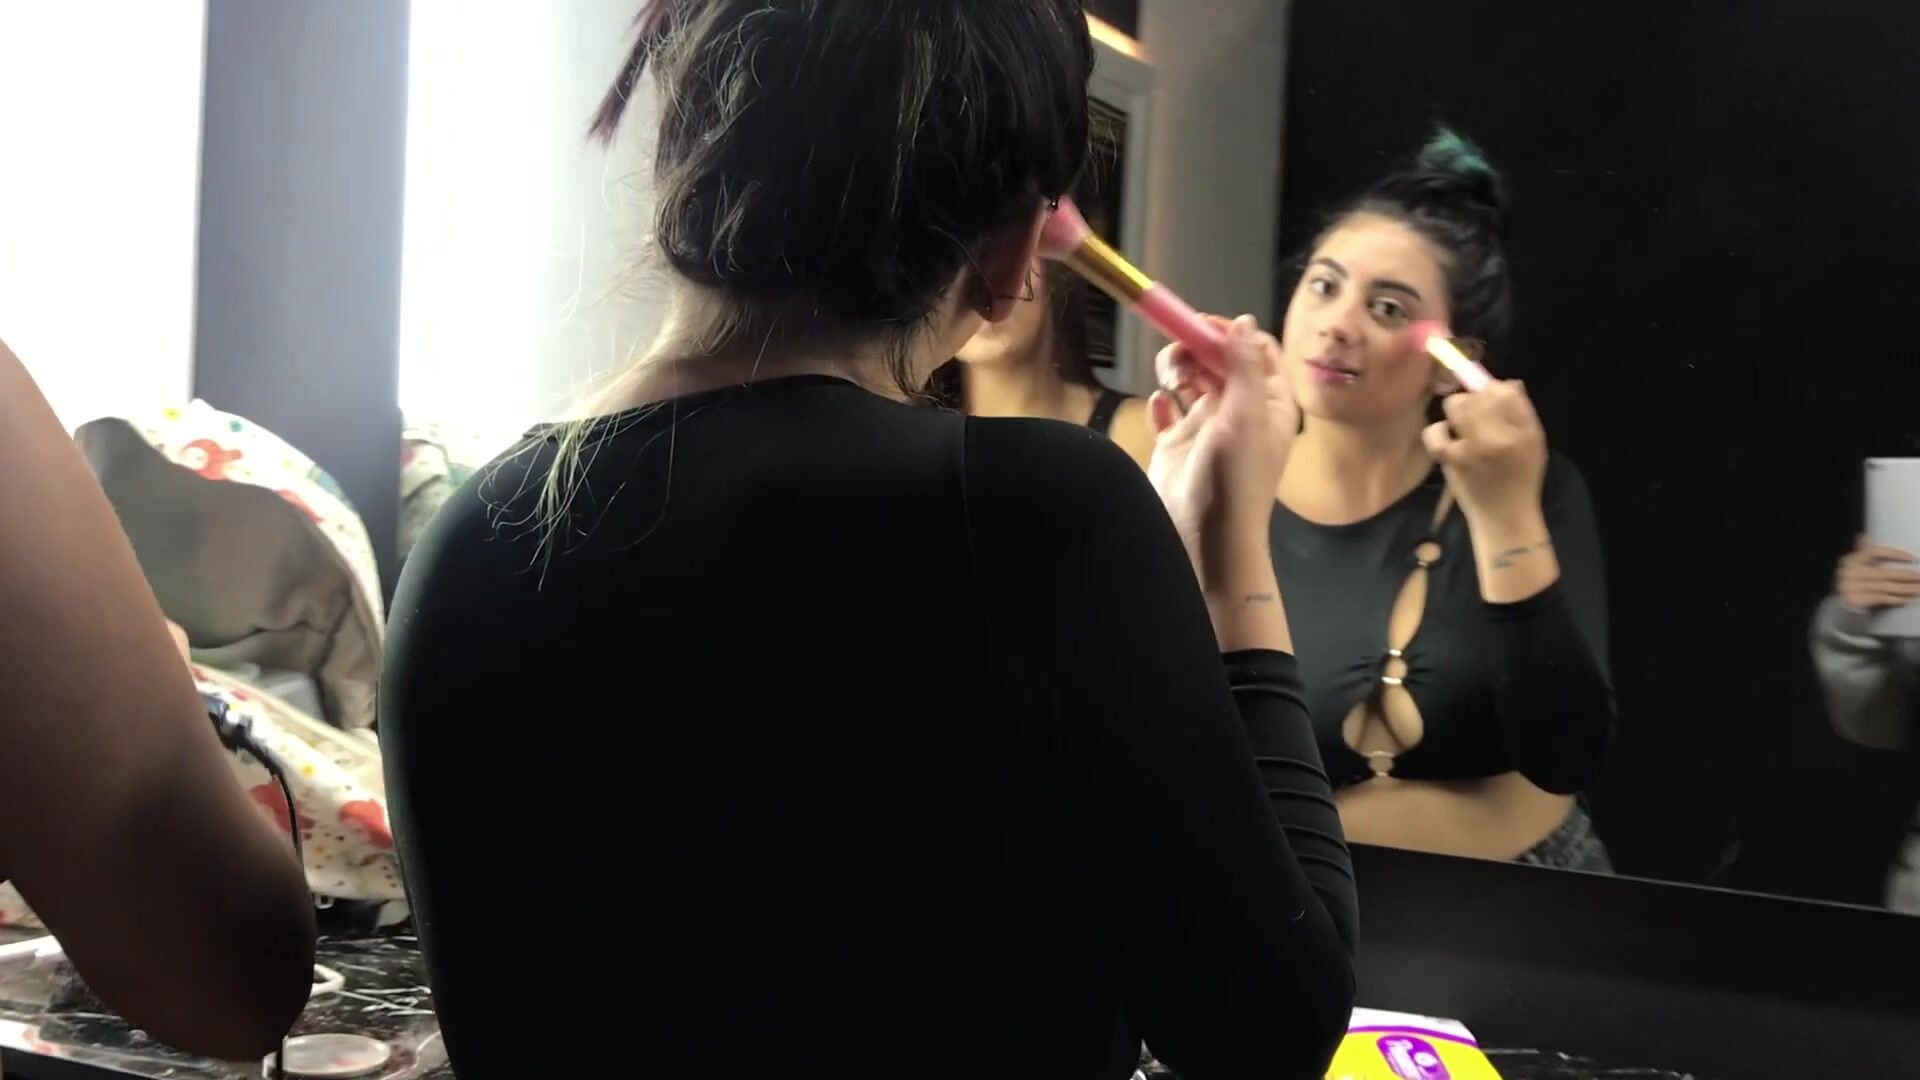 We put on makeup before LiveStream